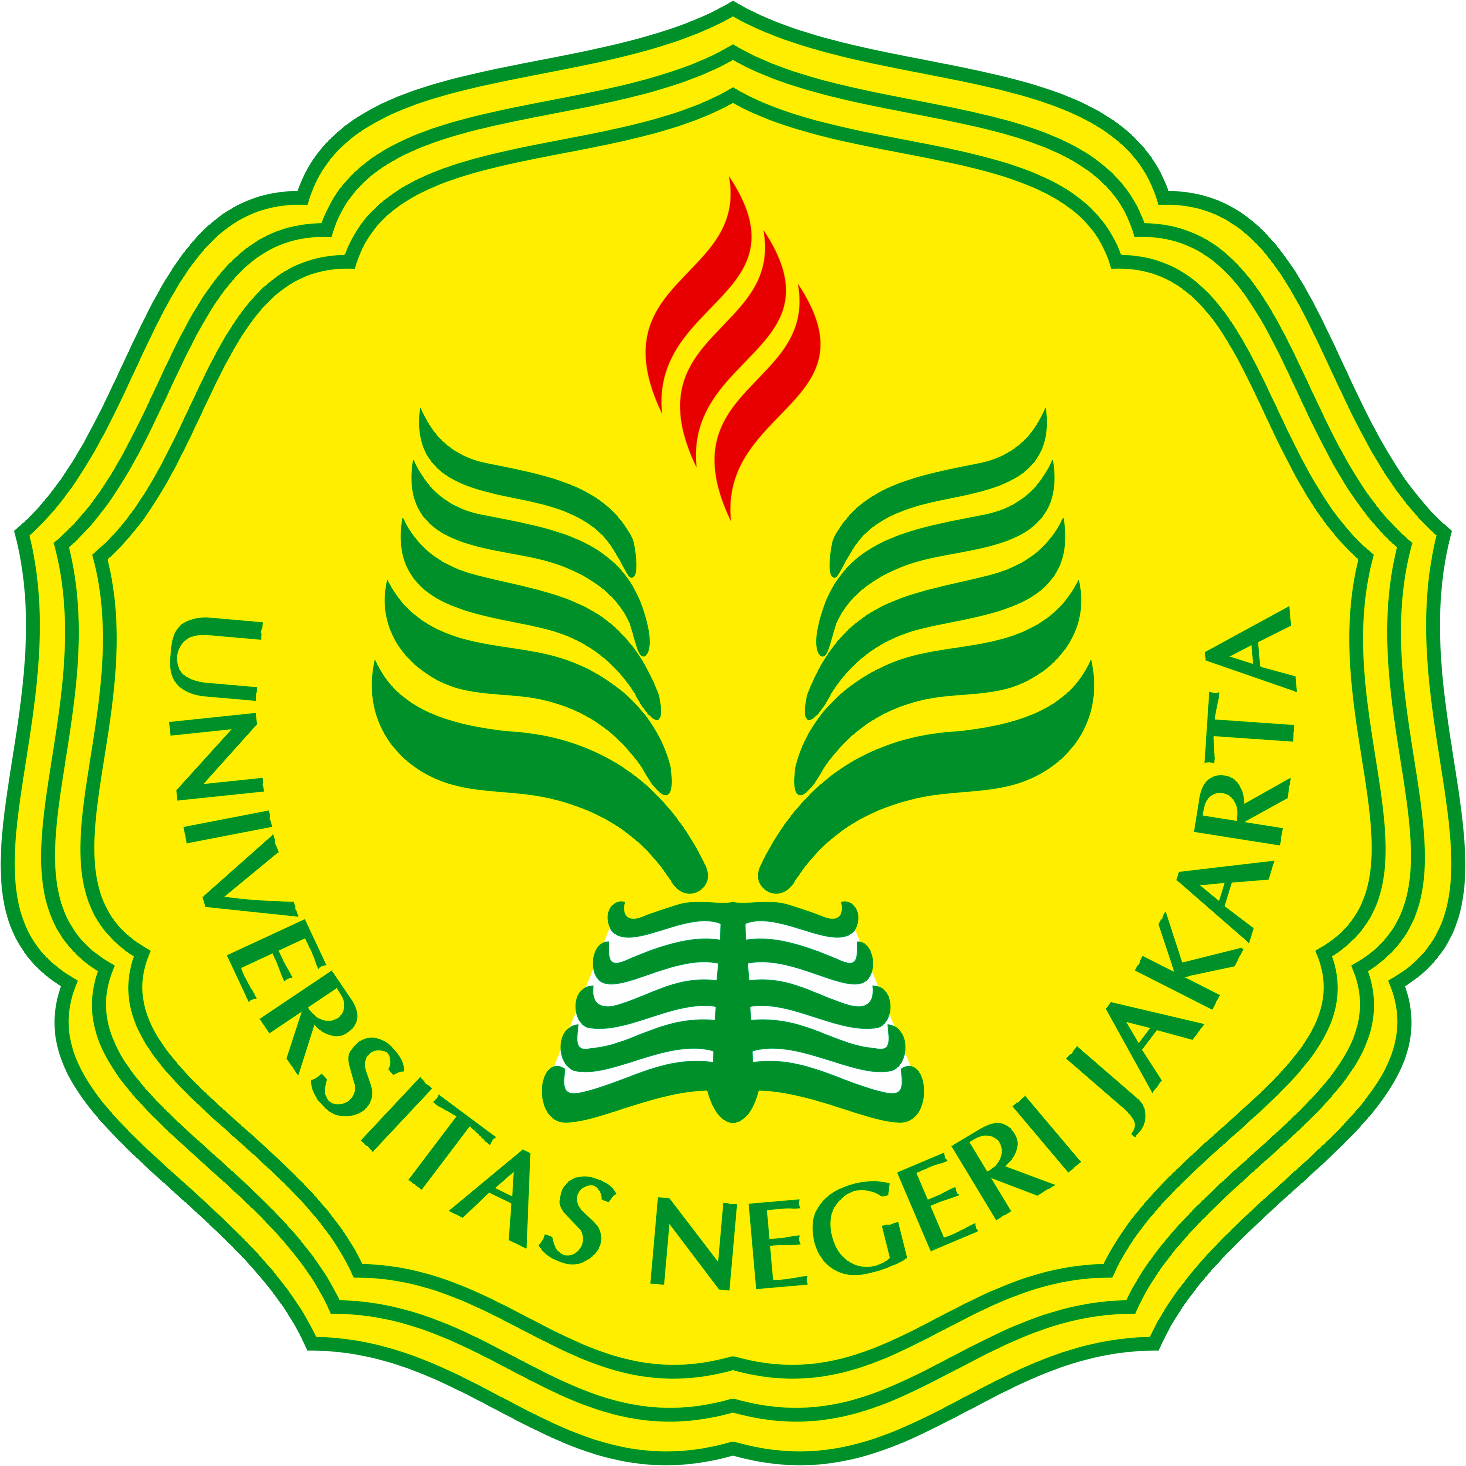 Universitas Negeri Jakarta Emblem PNG image